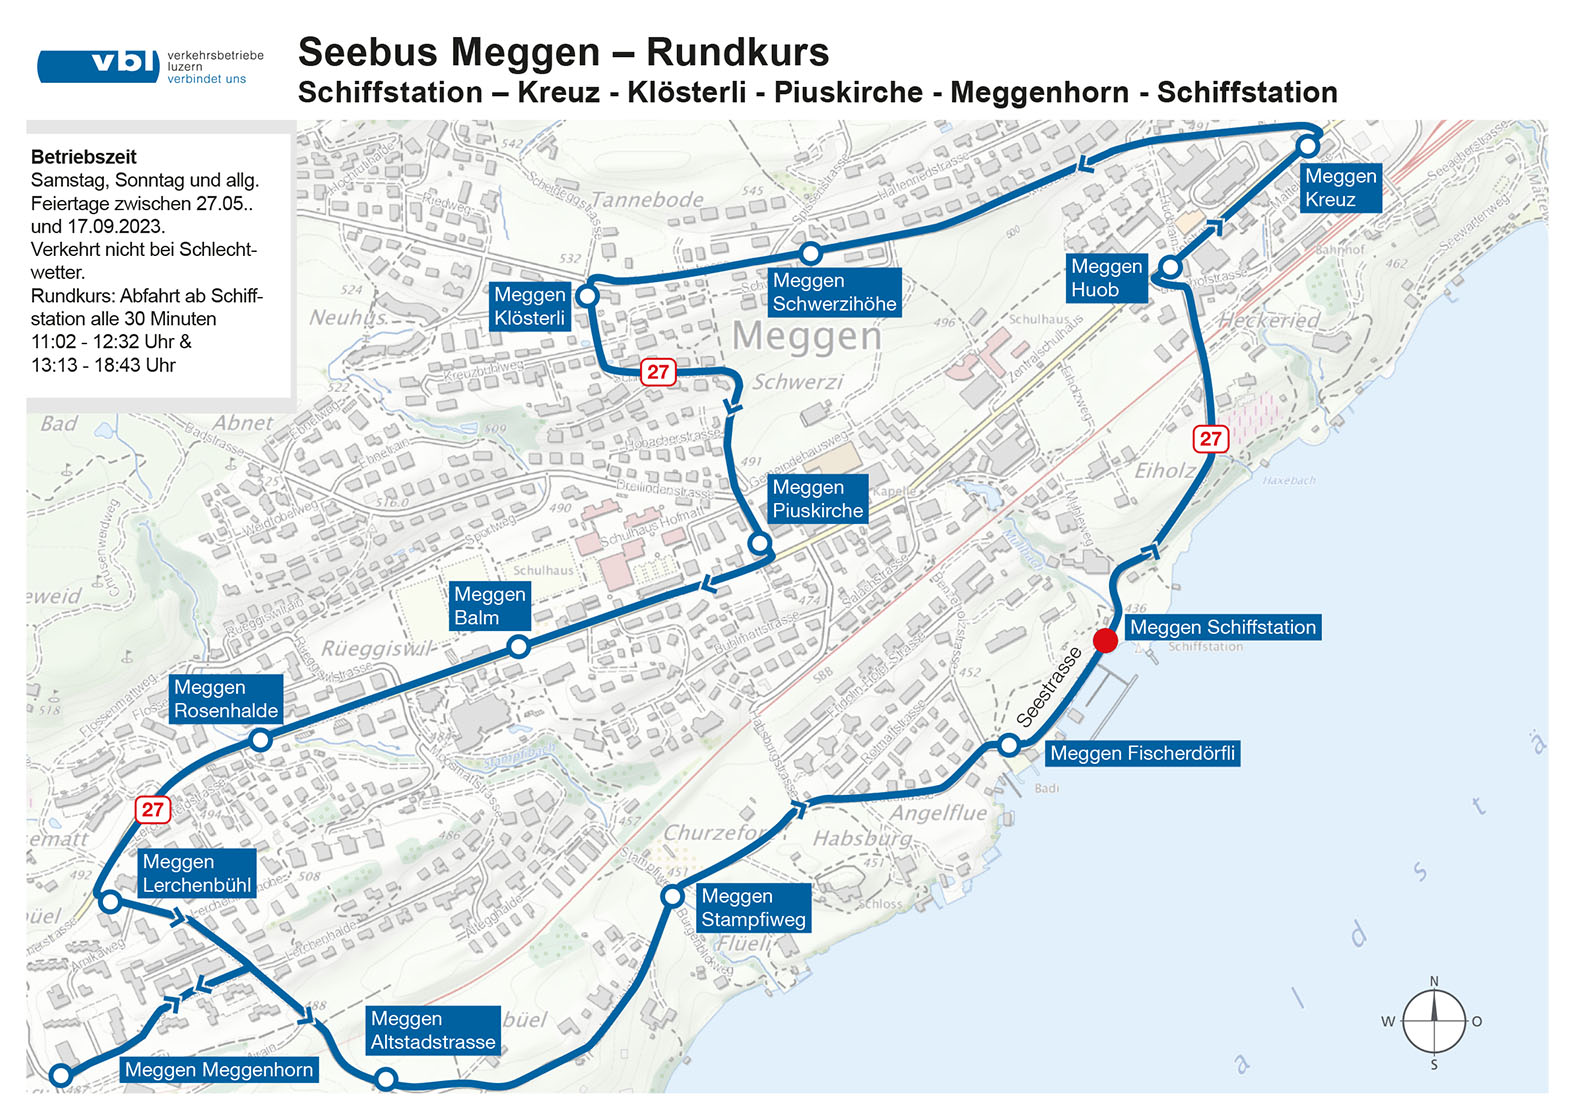 Der Rundkurs des Megger Seebusses in der Saison 2023.